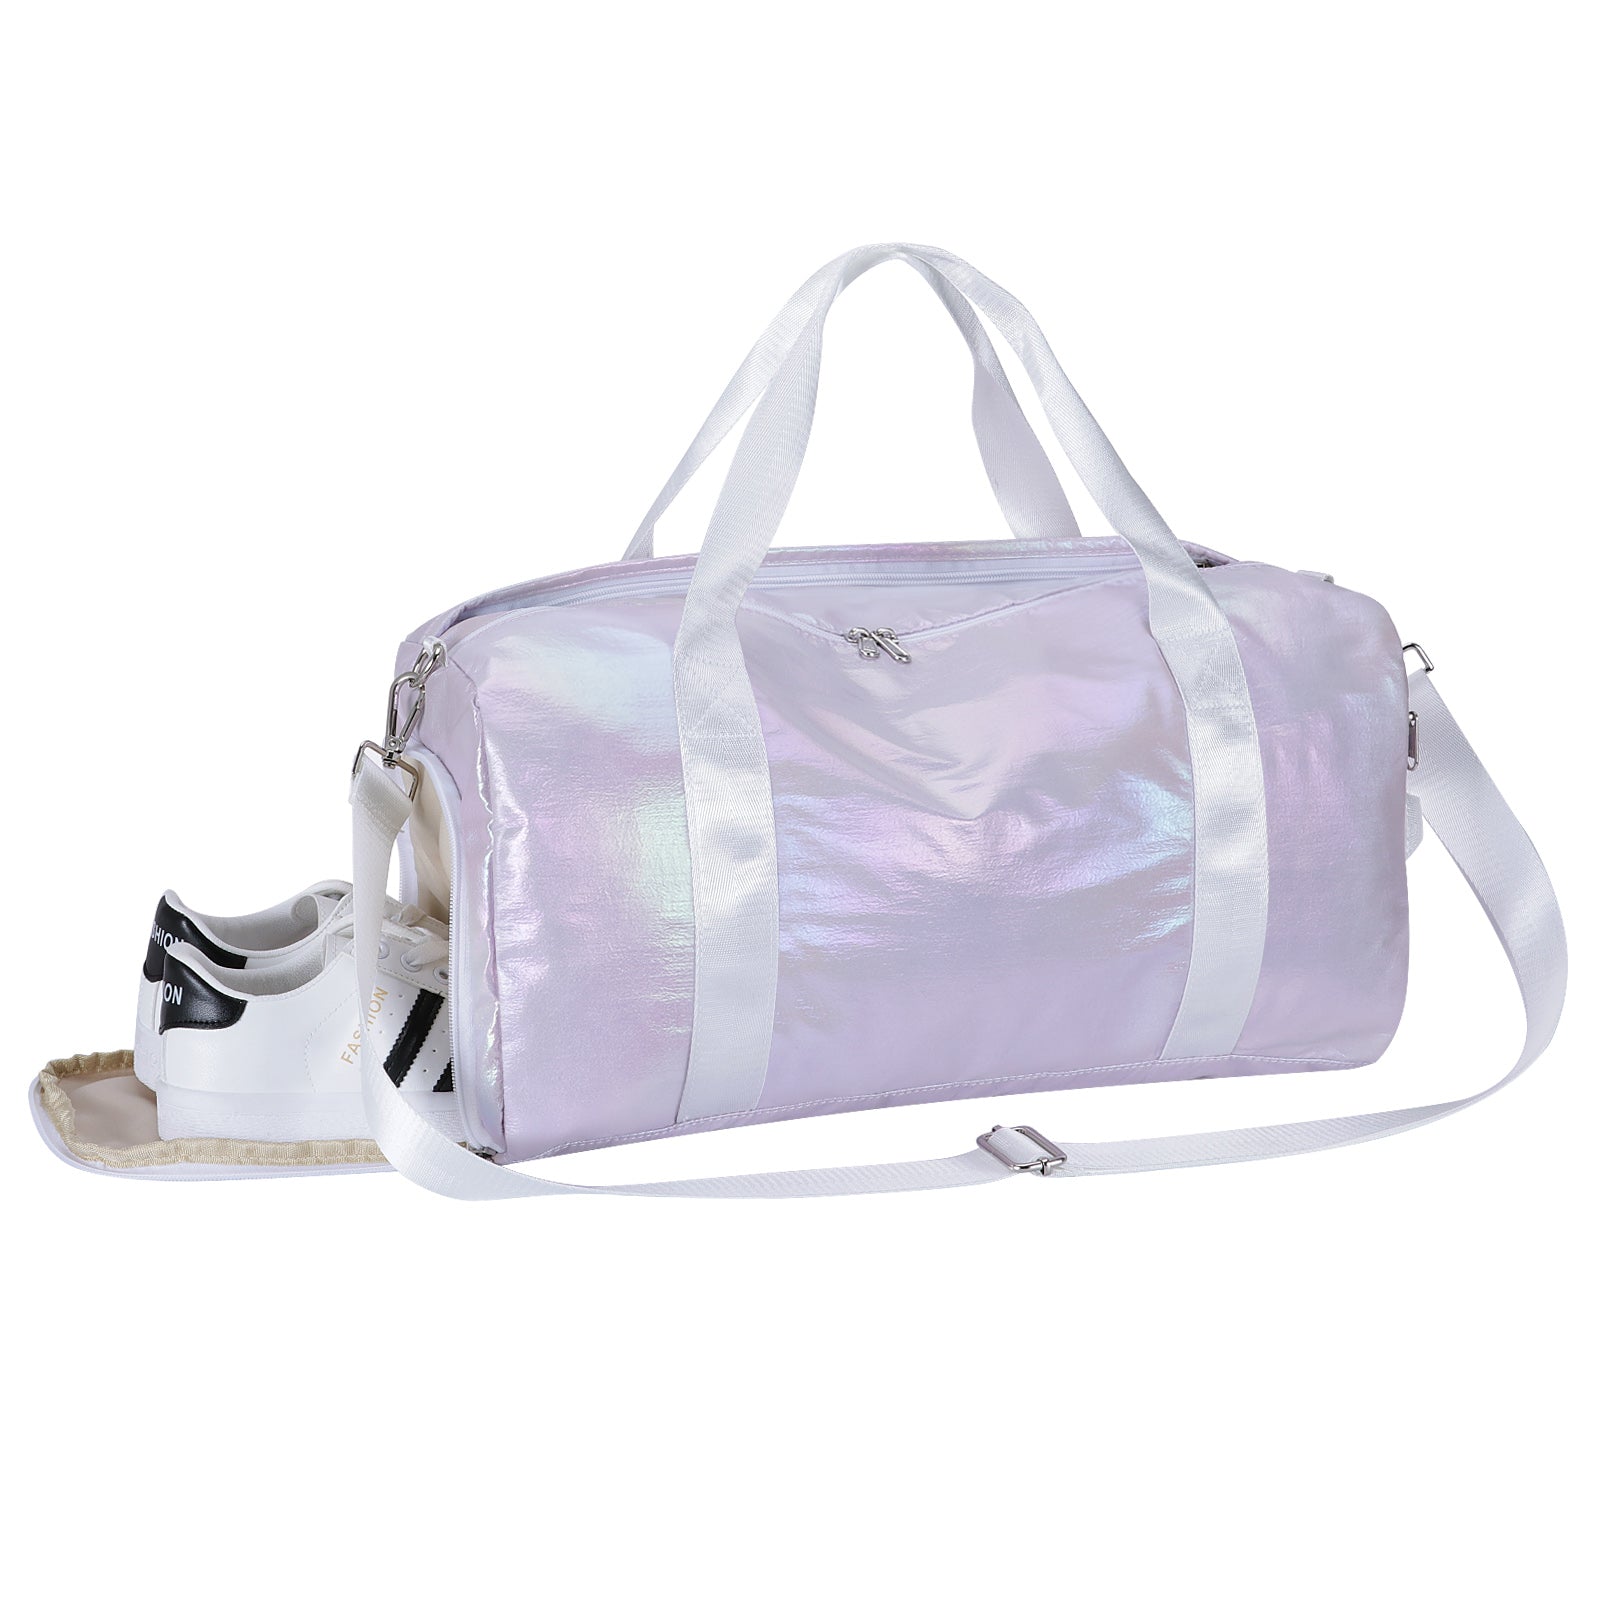 KAMO Gym Bag for Women, Sport Duffle Bag with Shoe Compartment & Wet Pocket, Weekender Overnight Bag Compartment for Women Girls Travel, Gym, Yoga, School - KAMO